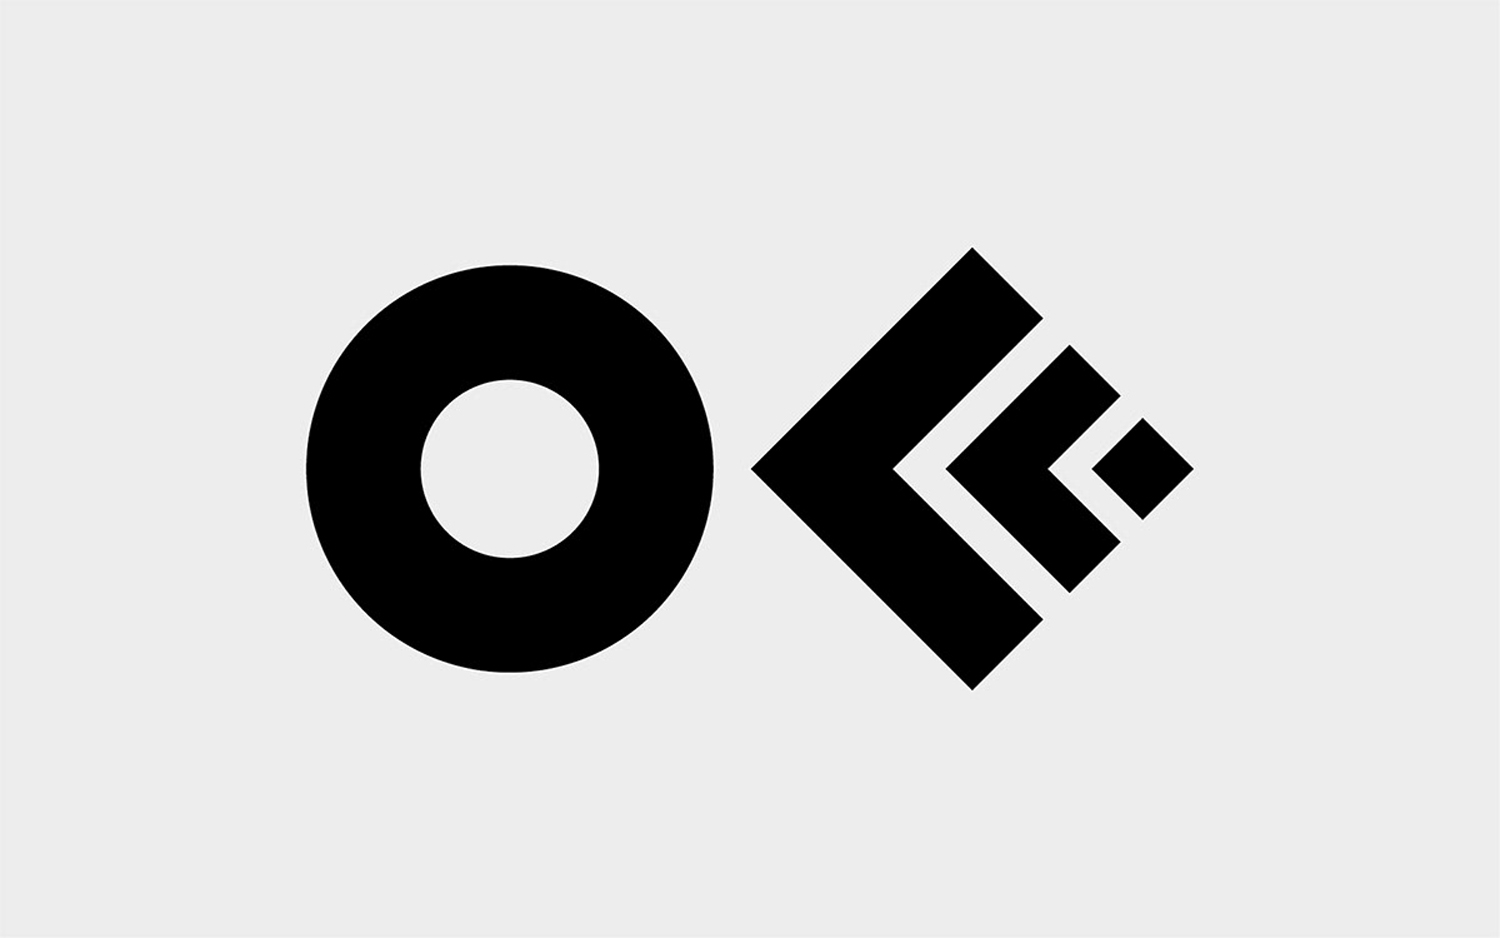 OFFF logo 2019